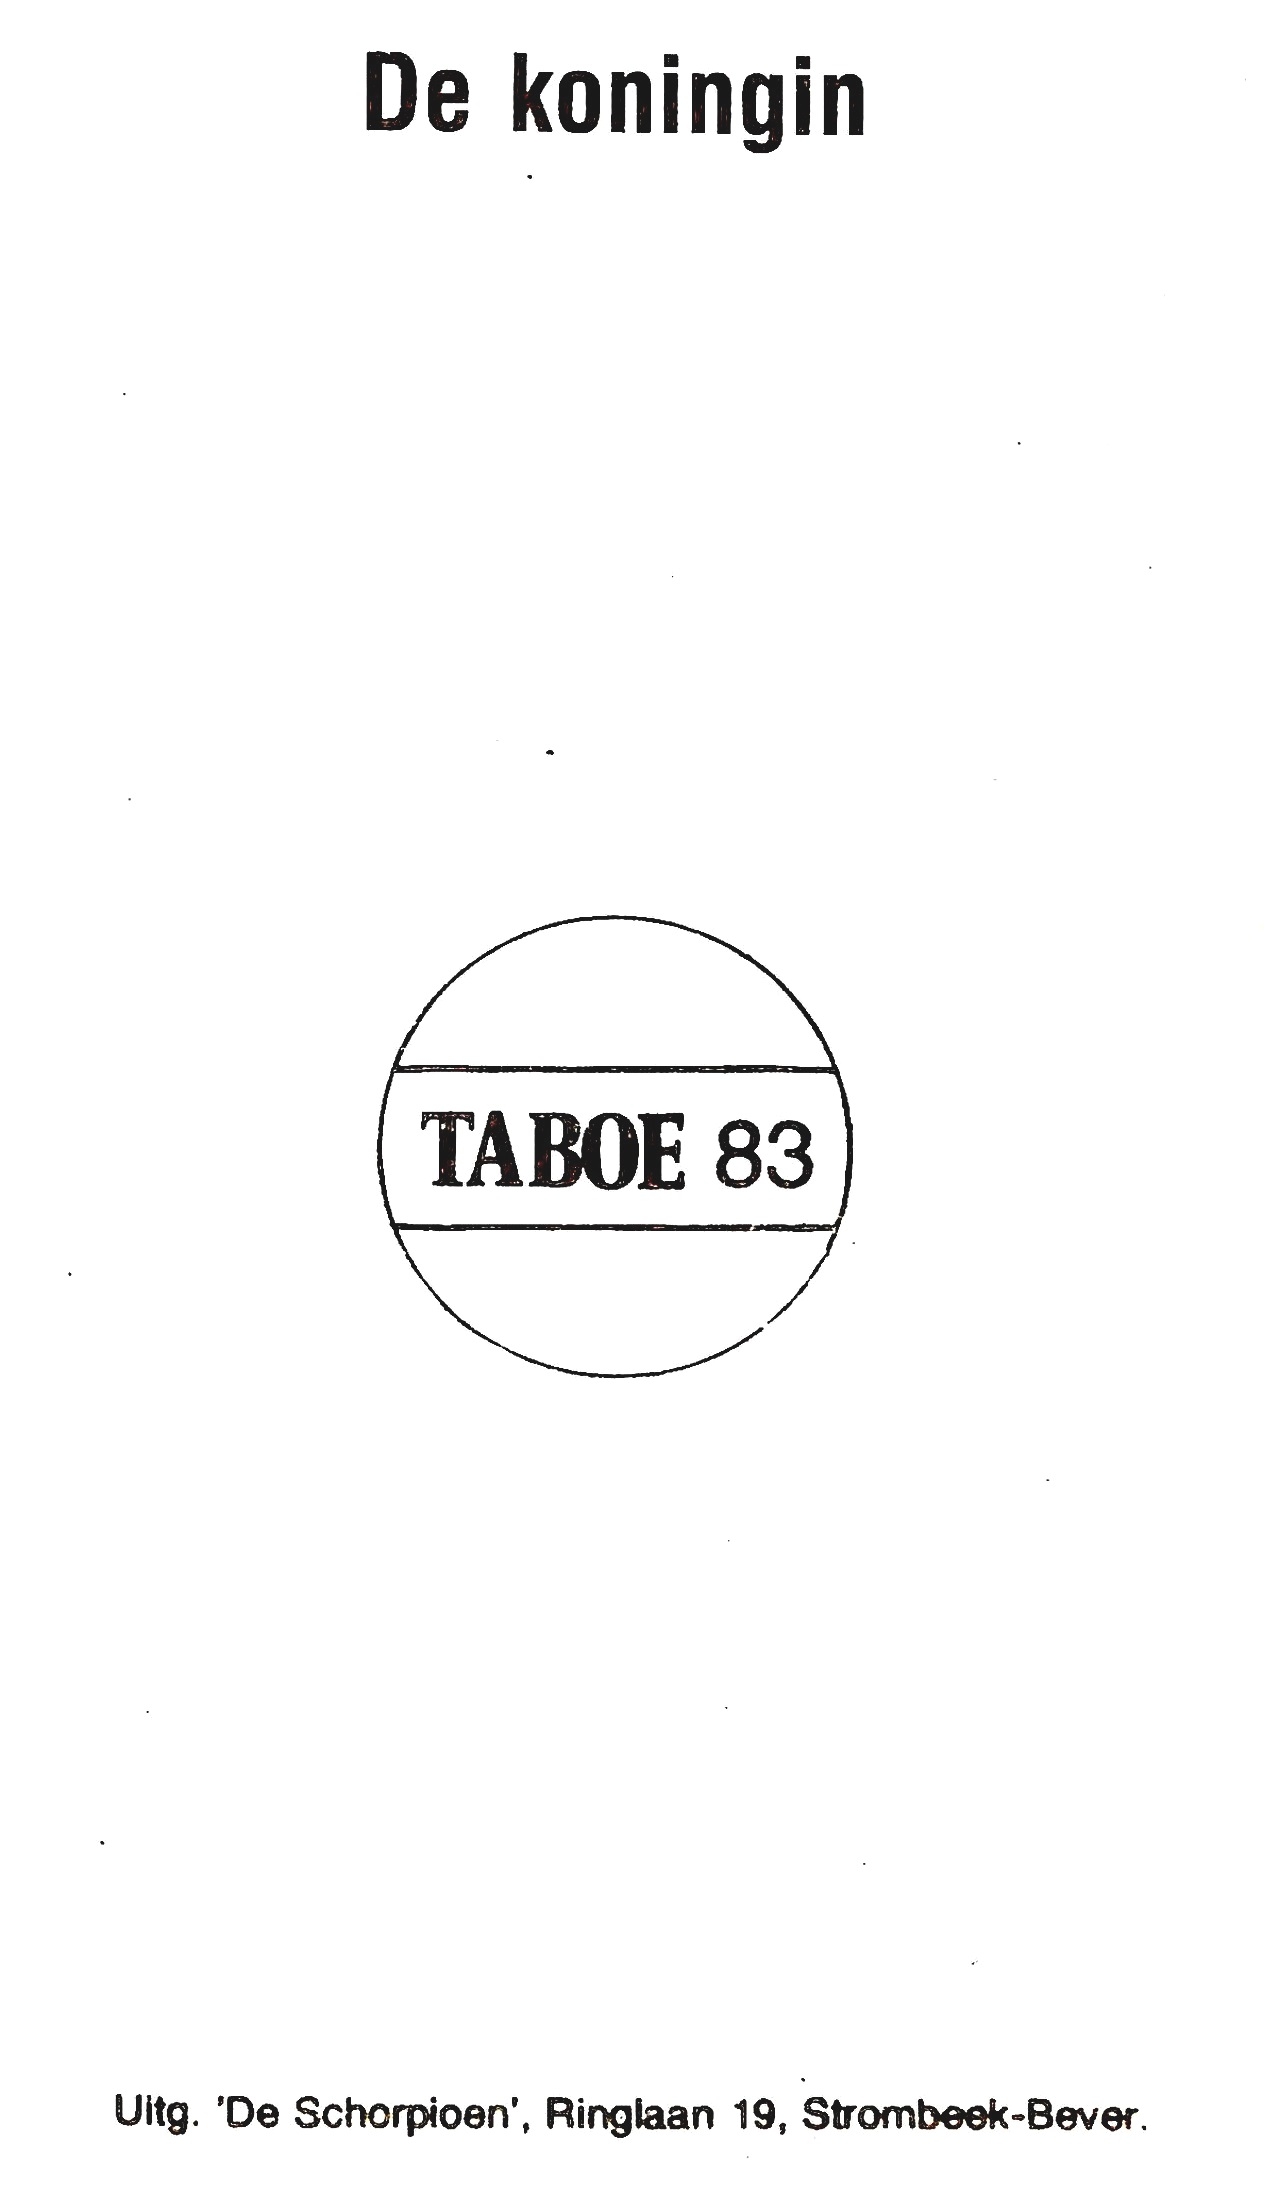 Taboe 83 - De Koningin (Dutch) 1